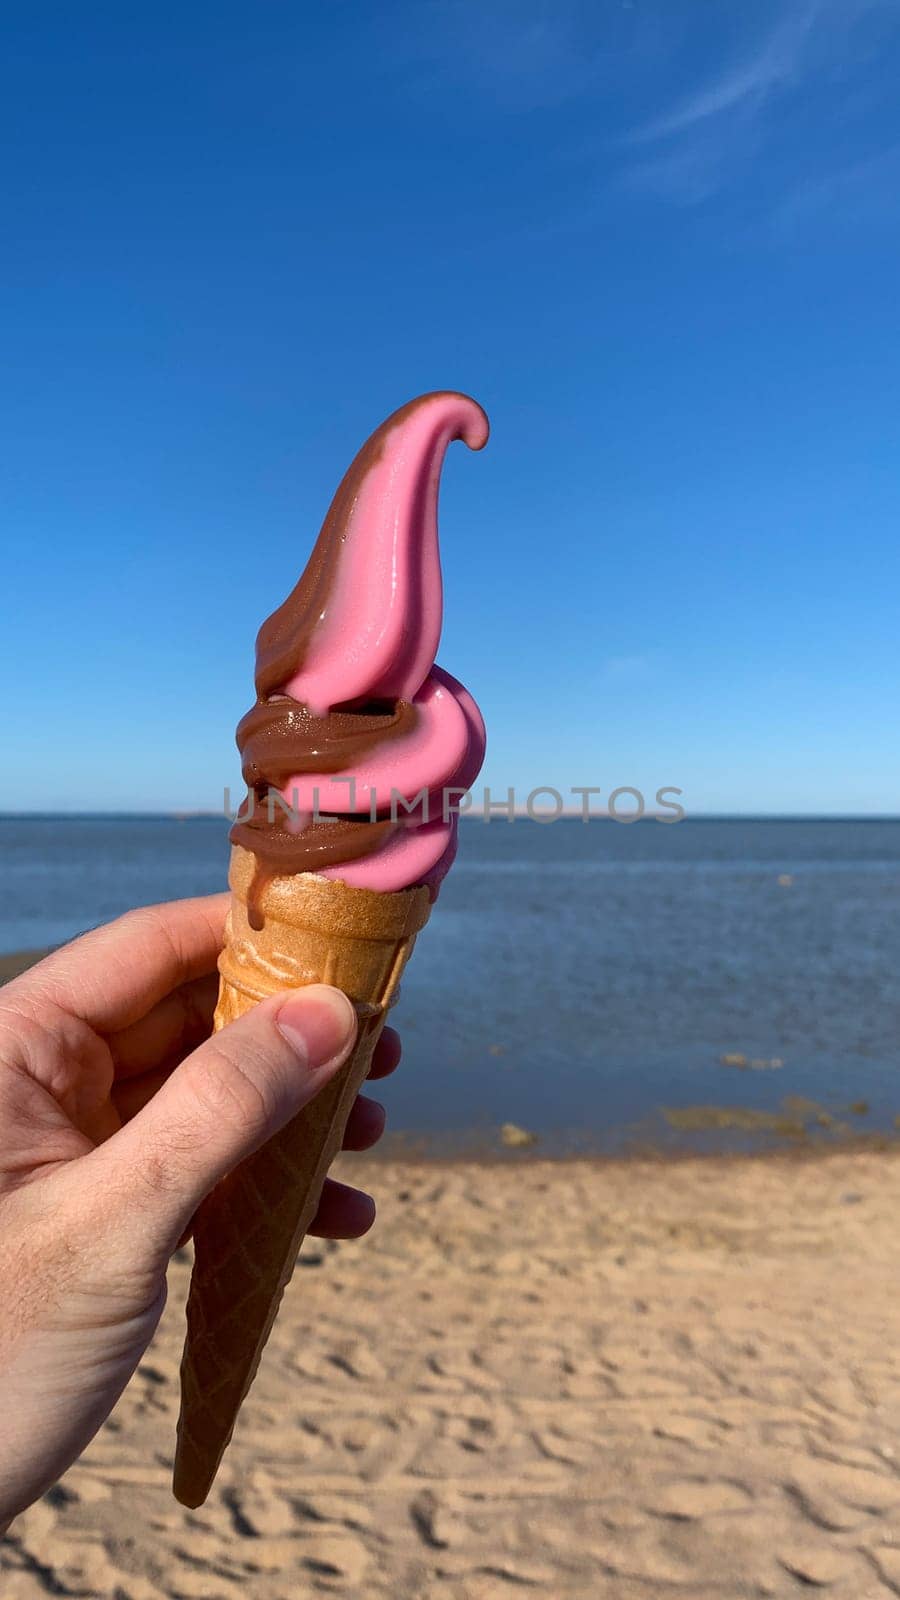 Ice cream melting against backdrop of sea by timurmalazoniia